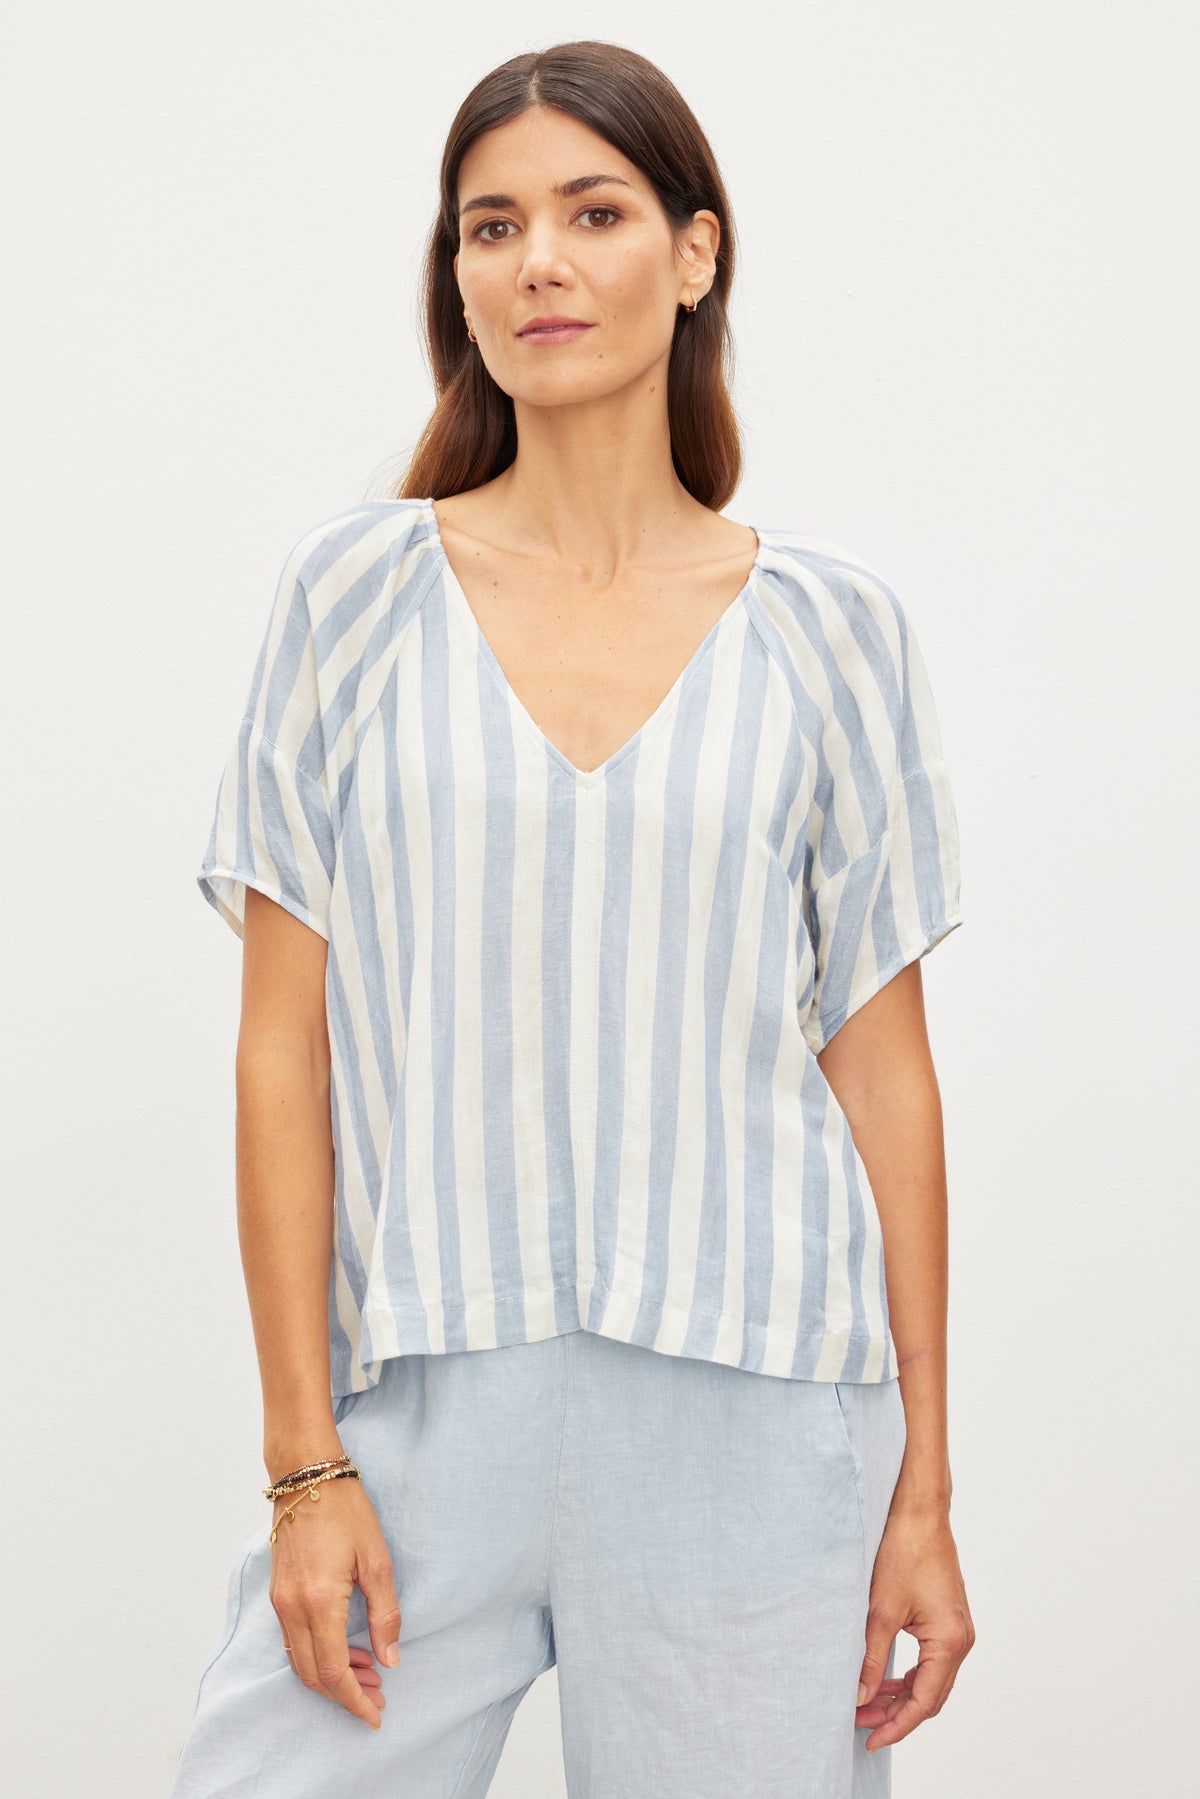 Velvet Katy Stripe Linen Puff Sleeve Top - Sky Clothing - Tops - Shirts - Blouses - Blouses Top Price by Velvet | Grace the Boutique